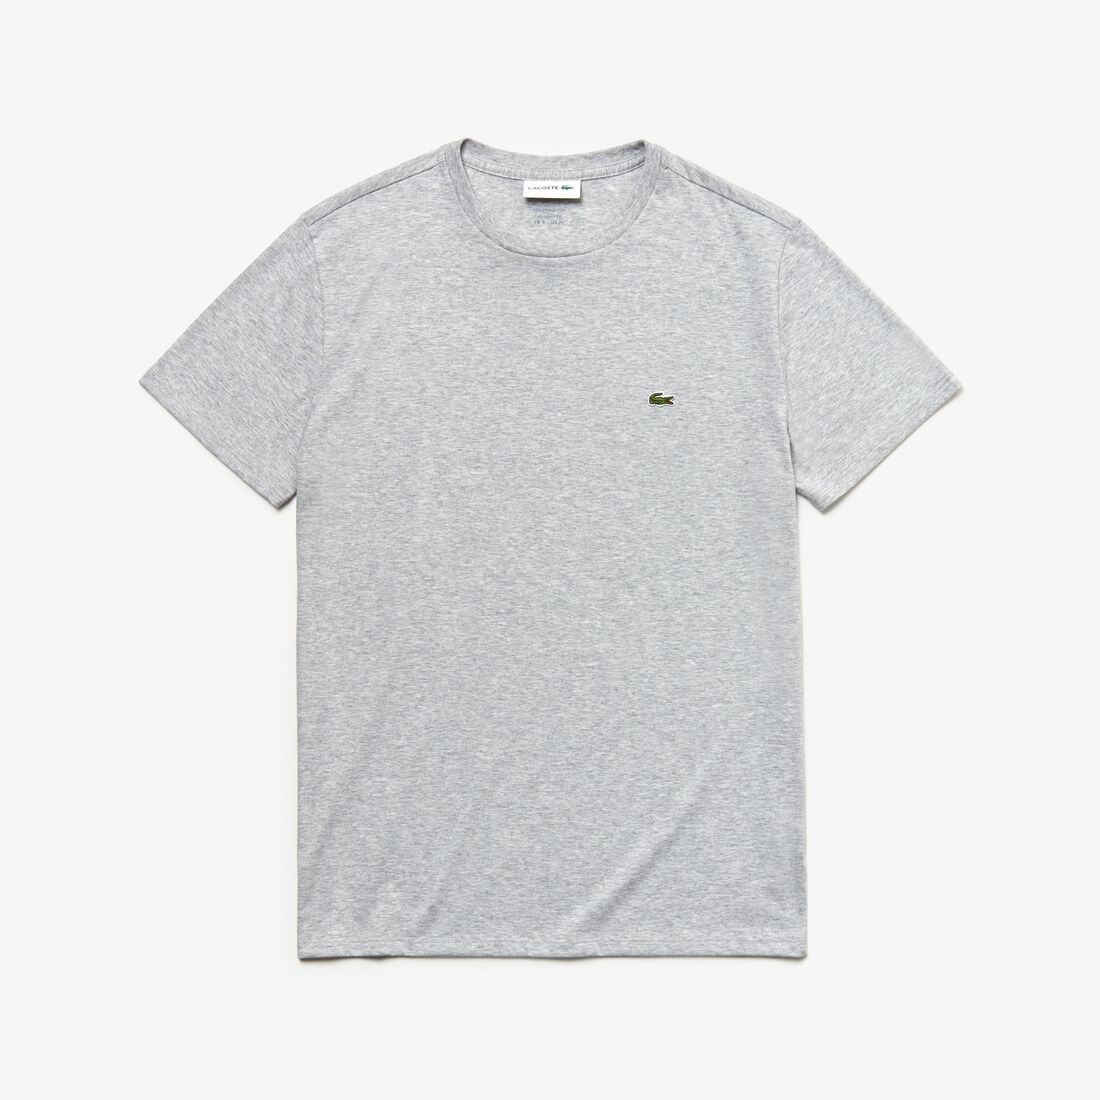 Lacoste - Pima Cotton Jersey T-Shirt, Crew Neck - Gray